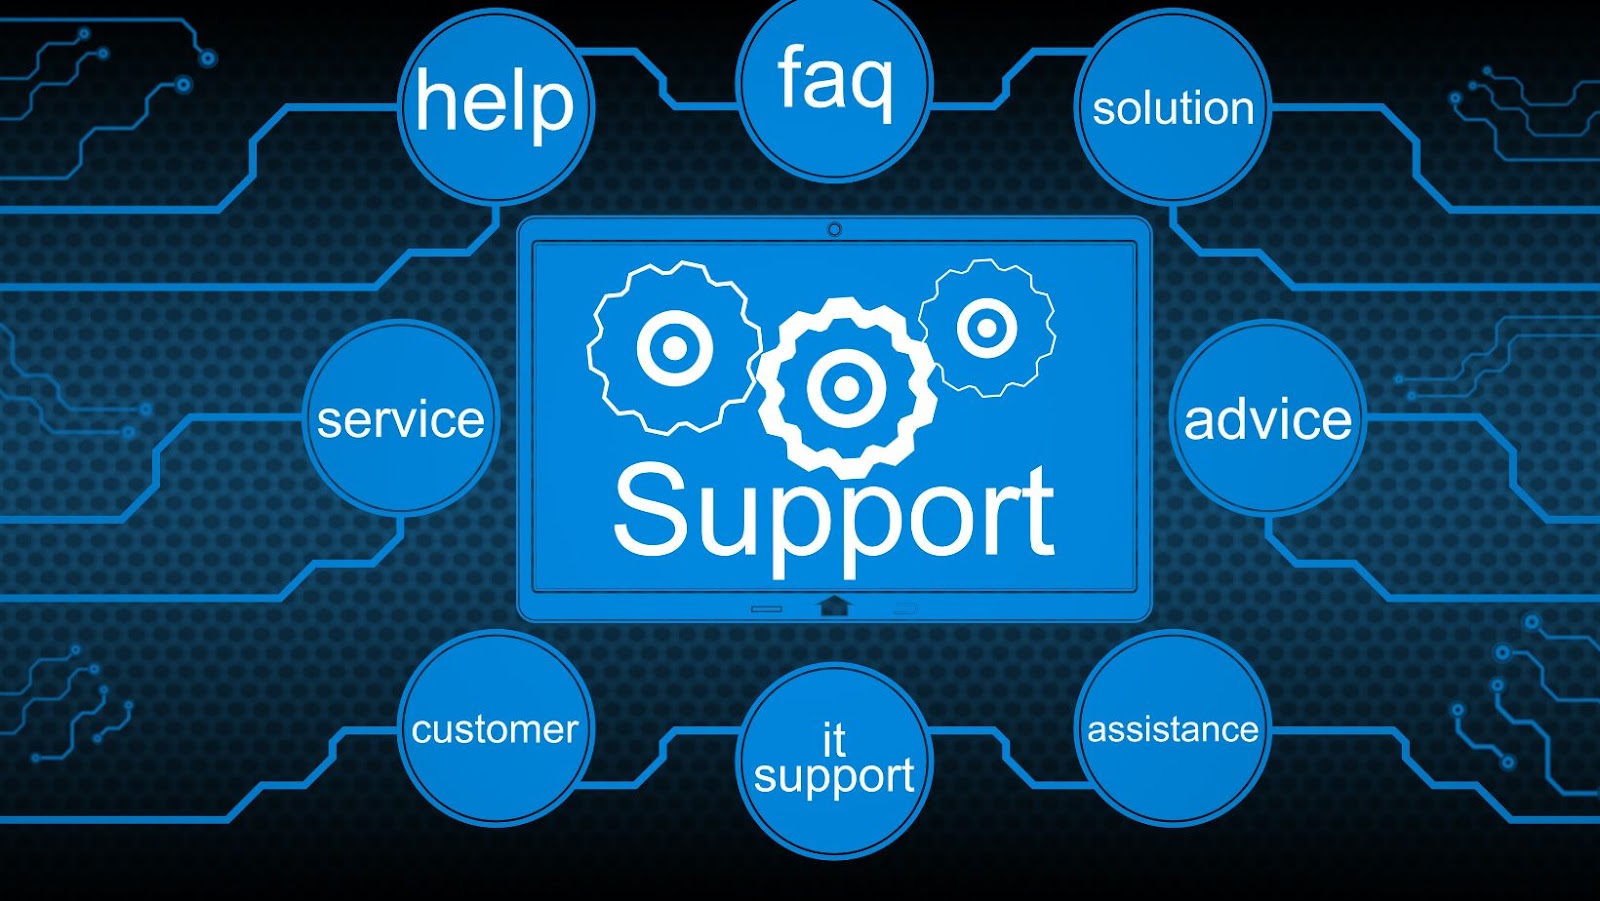 Supporting service com. It support. It поддержка. ИТ поддержка саппорт. It support logo.